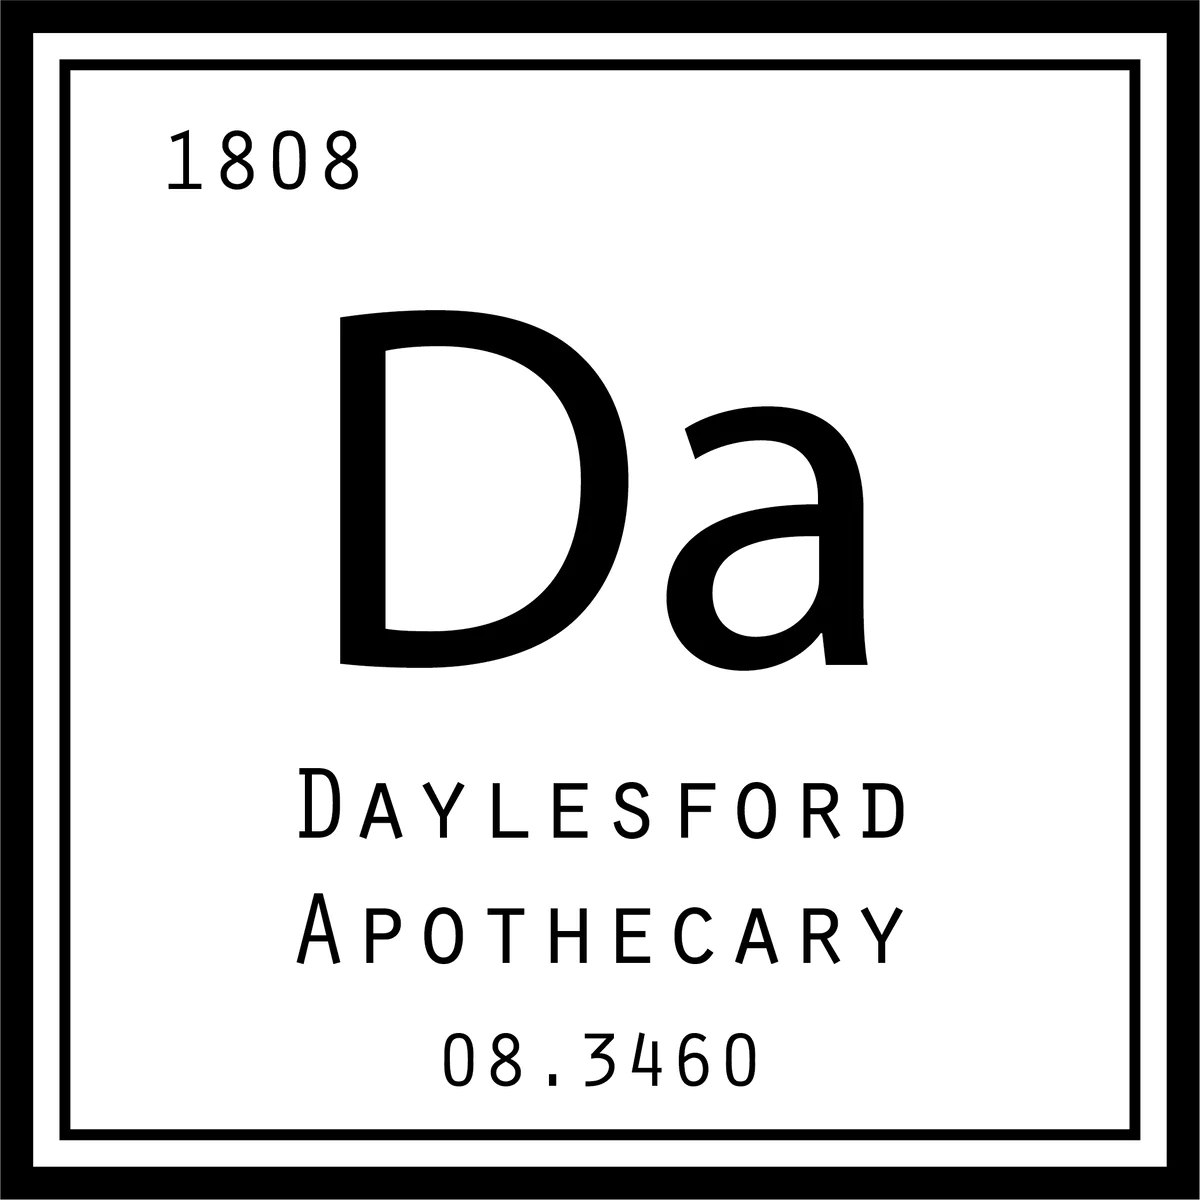 Daylesford Apothecary